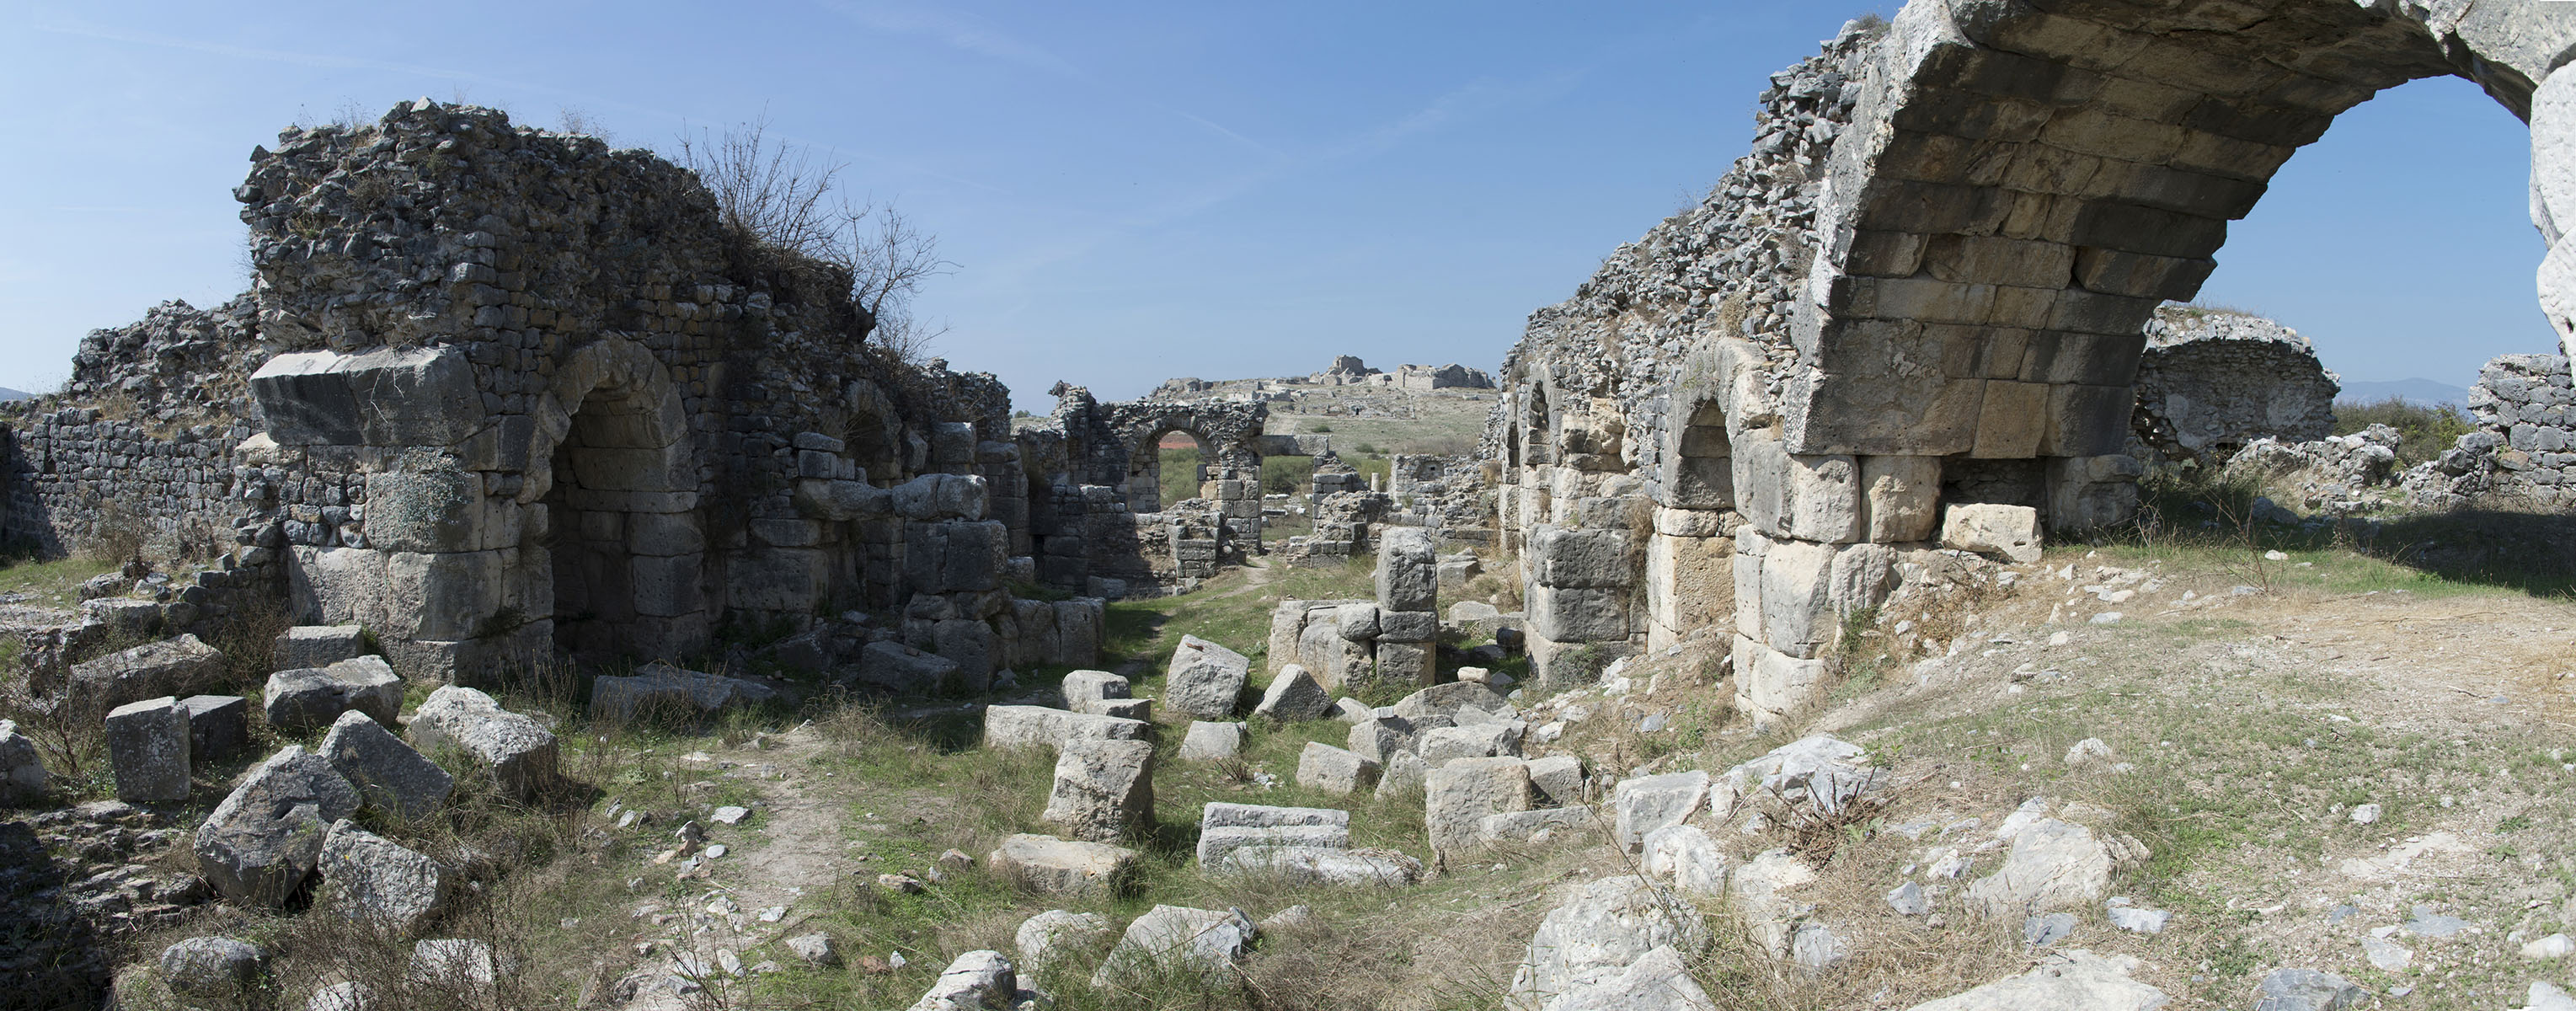 Miletus October 2015 3346 Panorama.jpg